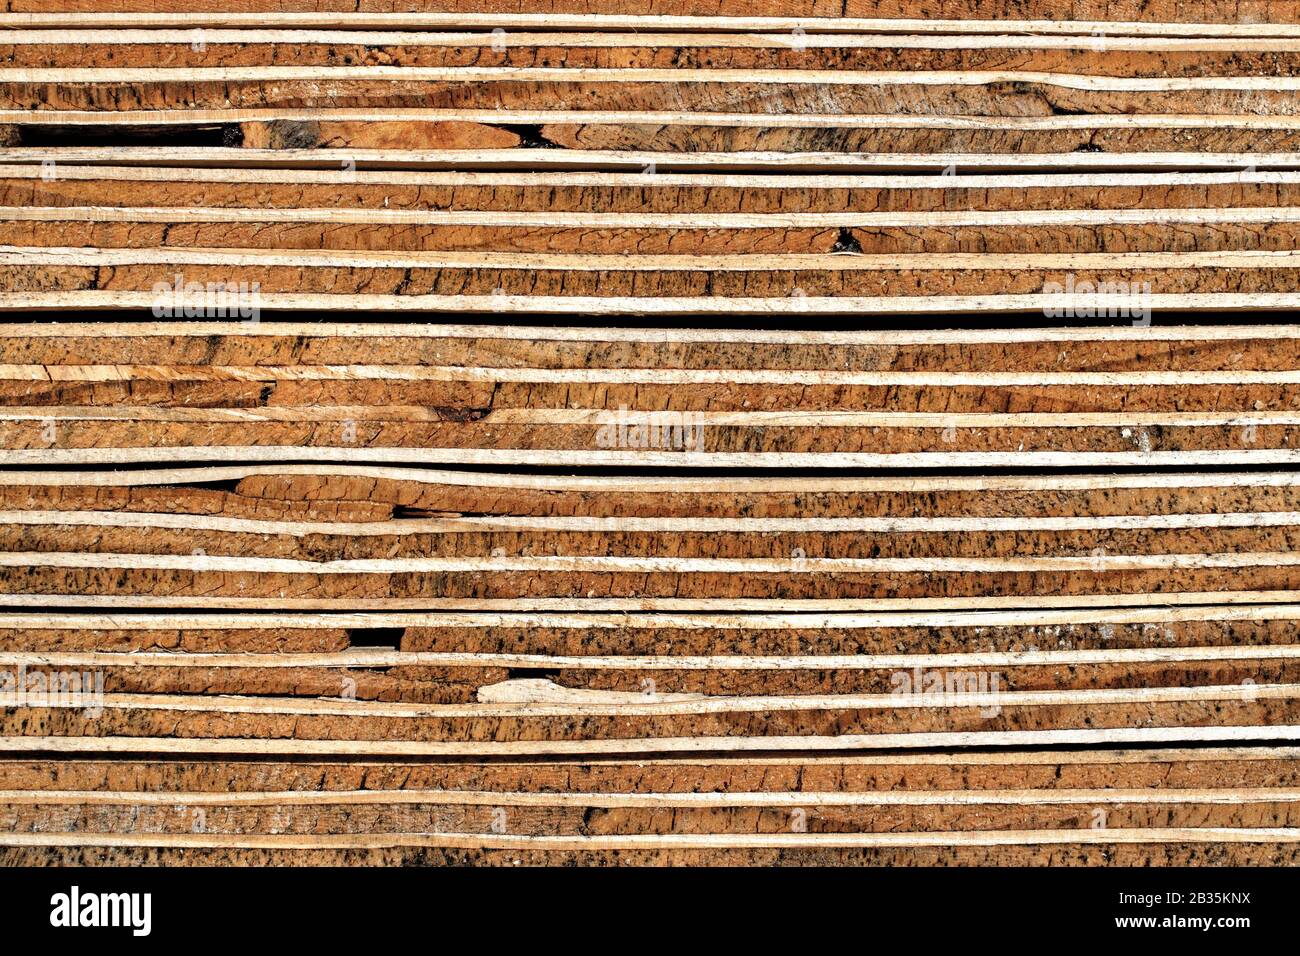 Konstruktion Holz Textur Hintergrund: Verwitterter Querschnitt aus vertürmten Sperrholzplatten - Detail Stockfoto